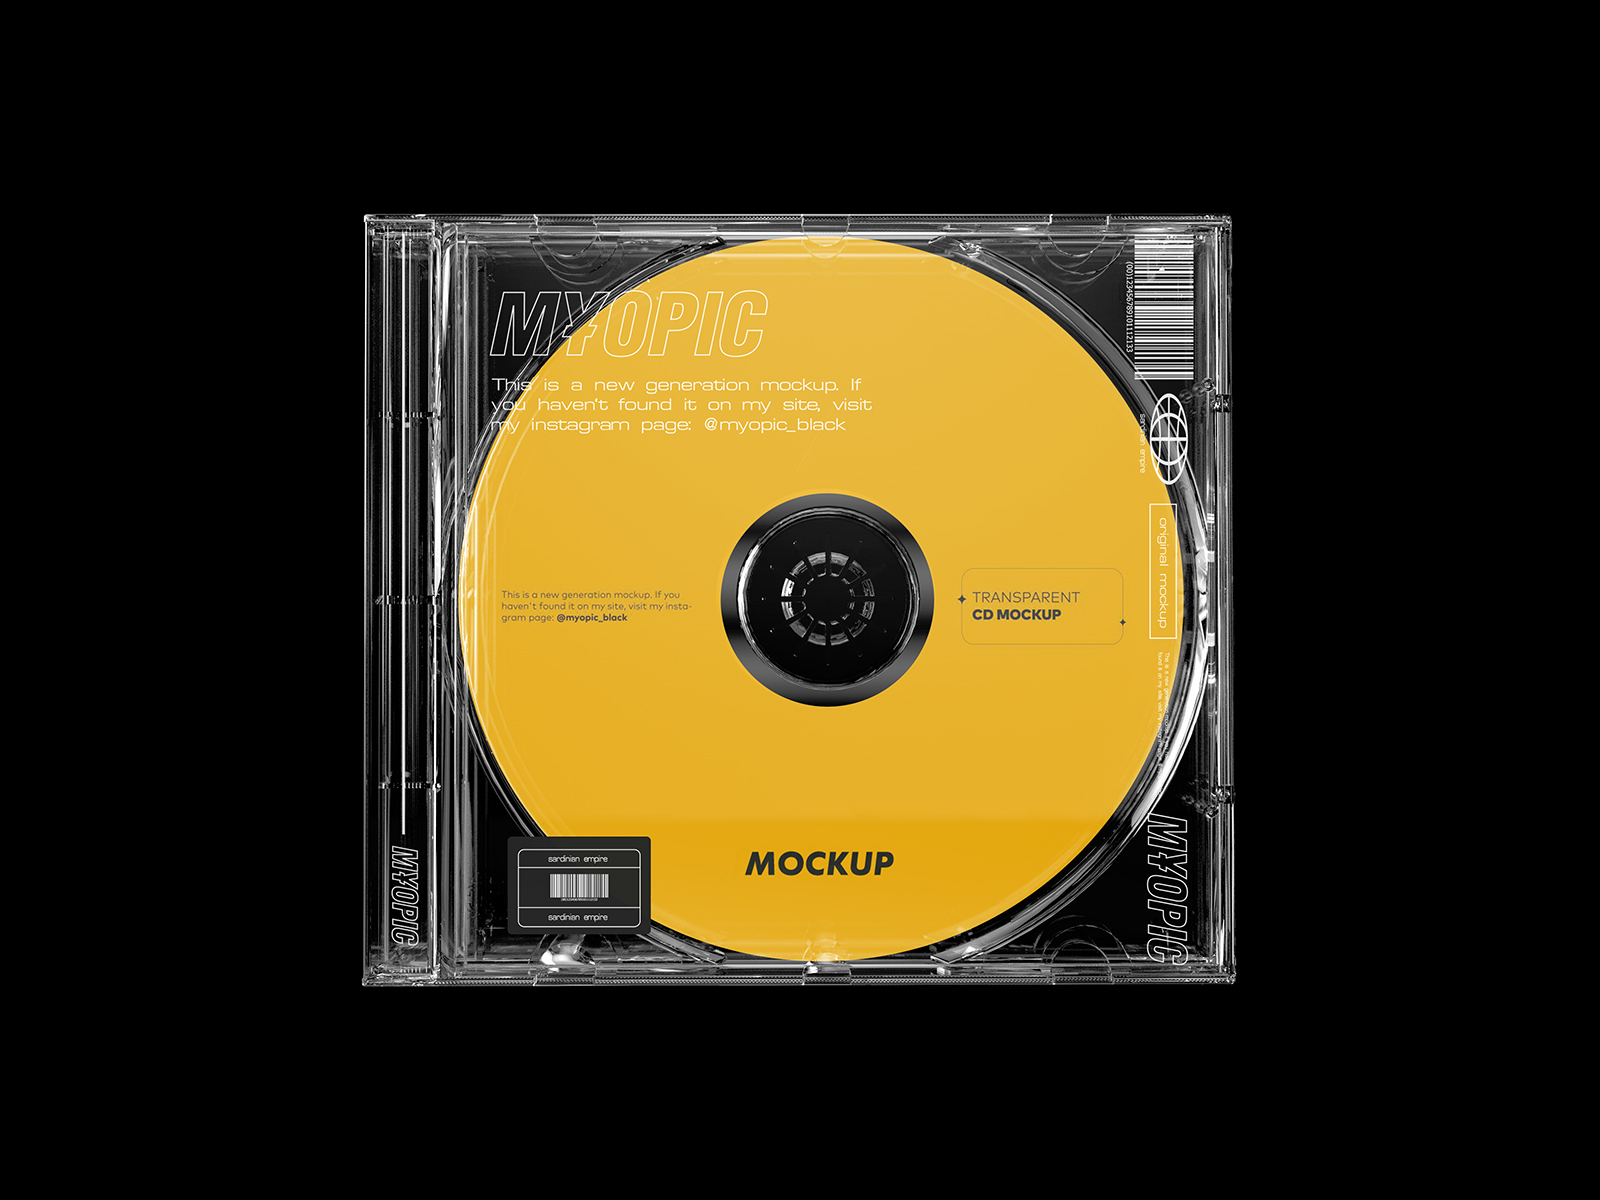 transparent-cd-mockup-by-pixelbuddha-on-dribbble